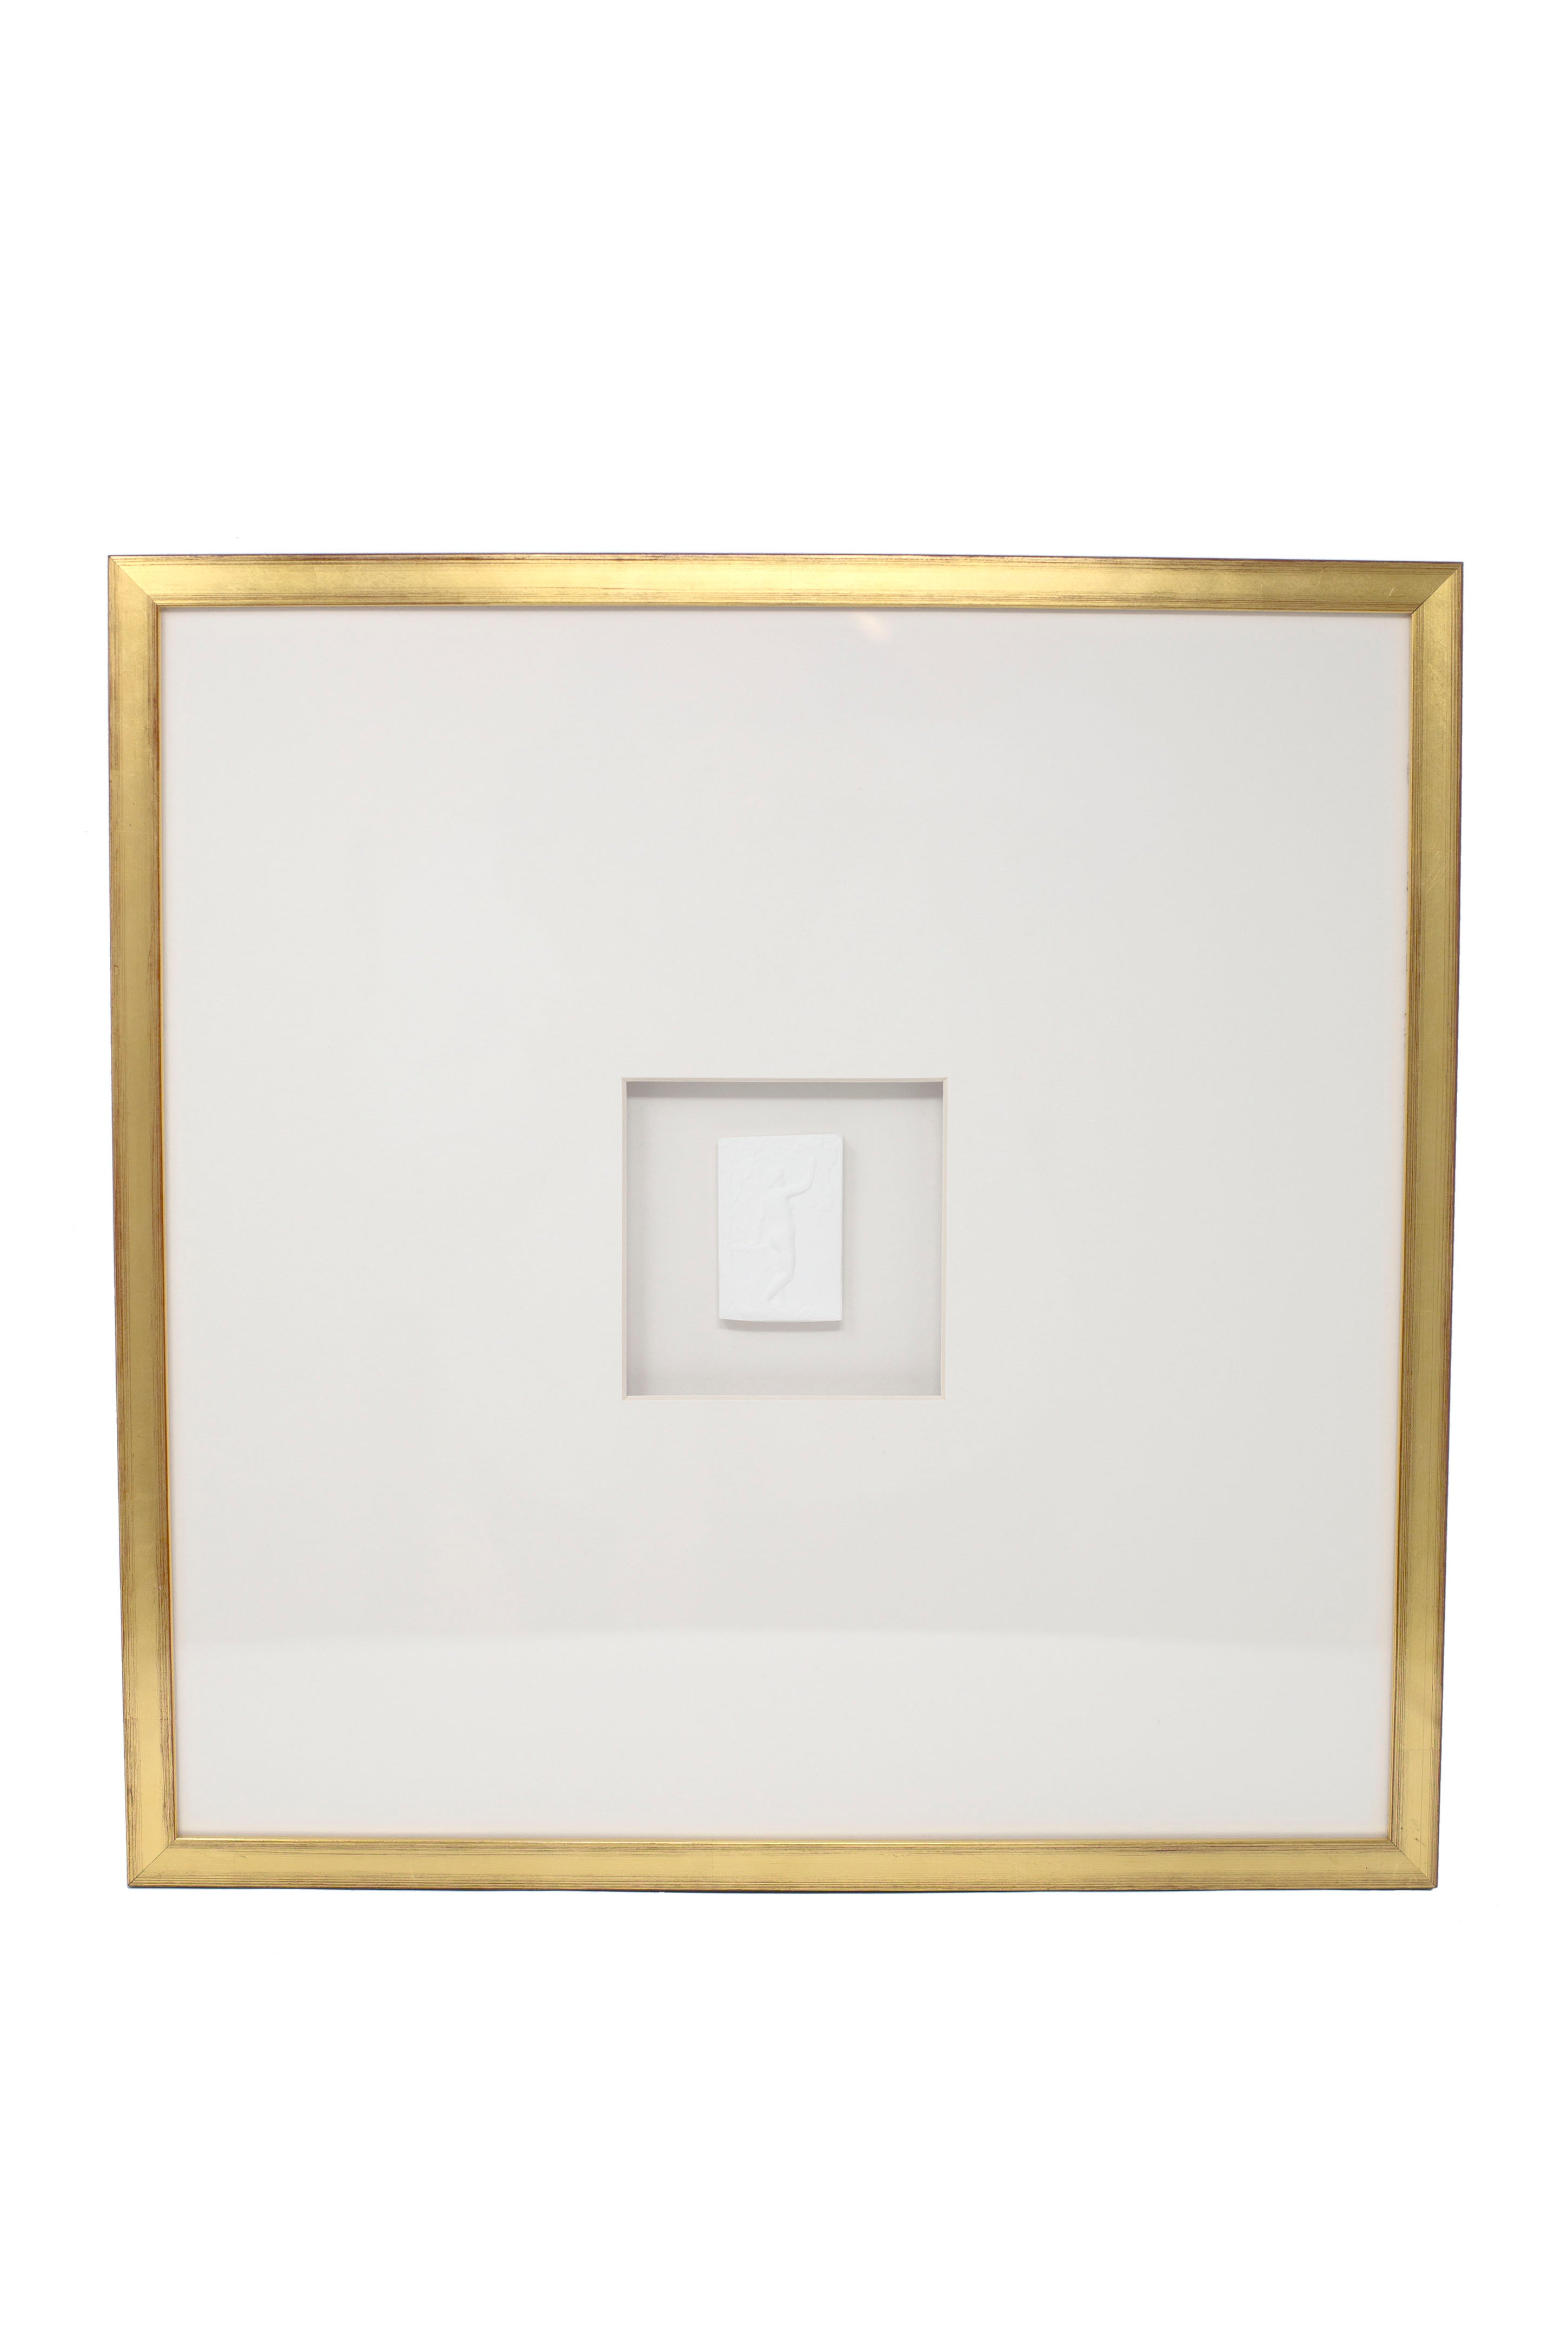 Single White Intaglio with Gold frame 